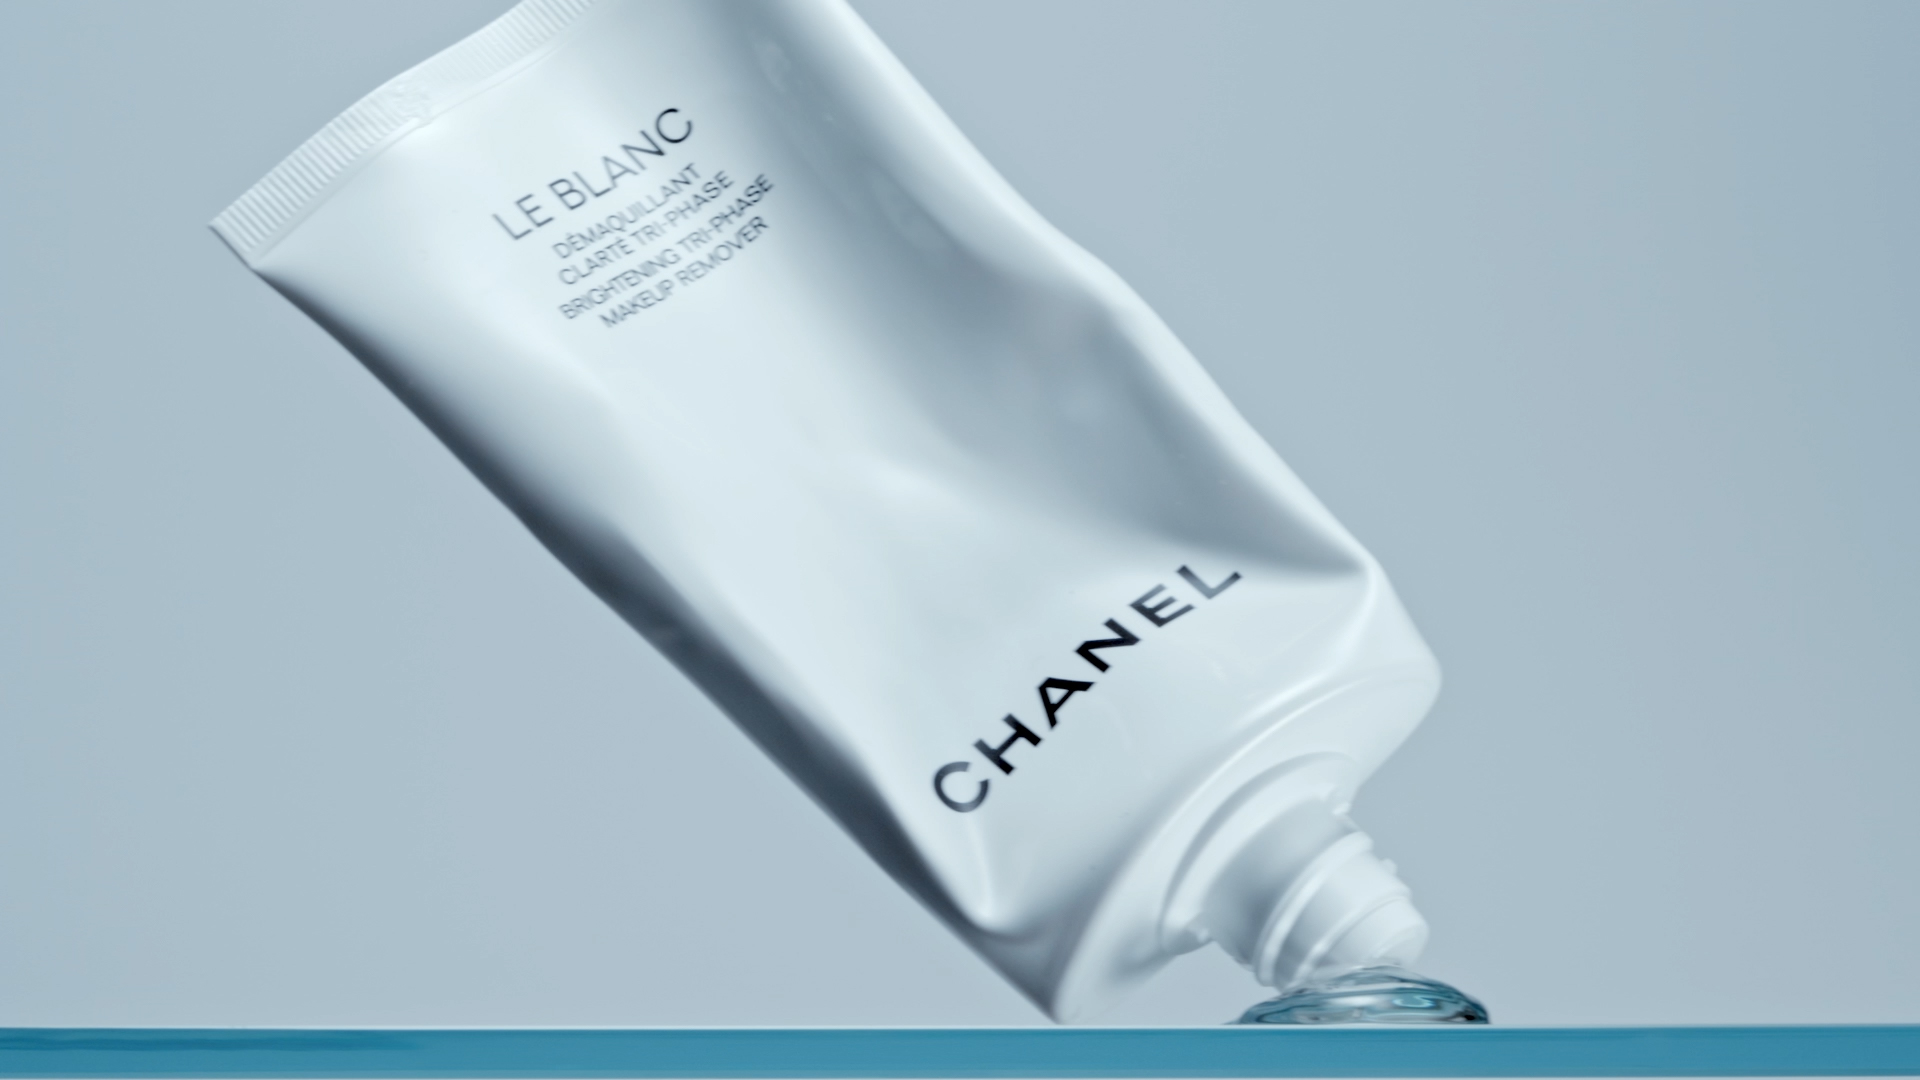 Chanel Le Blanc Intense Brightening Foam Cleanser 150ml/5oz – Fresh Beauty  Co. USA